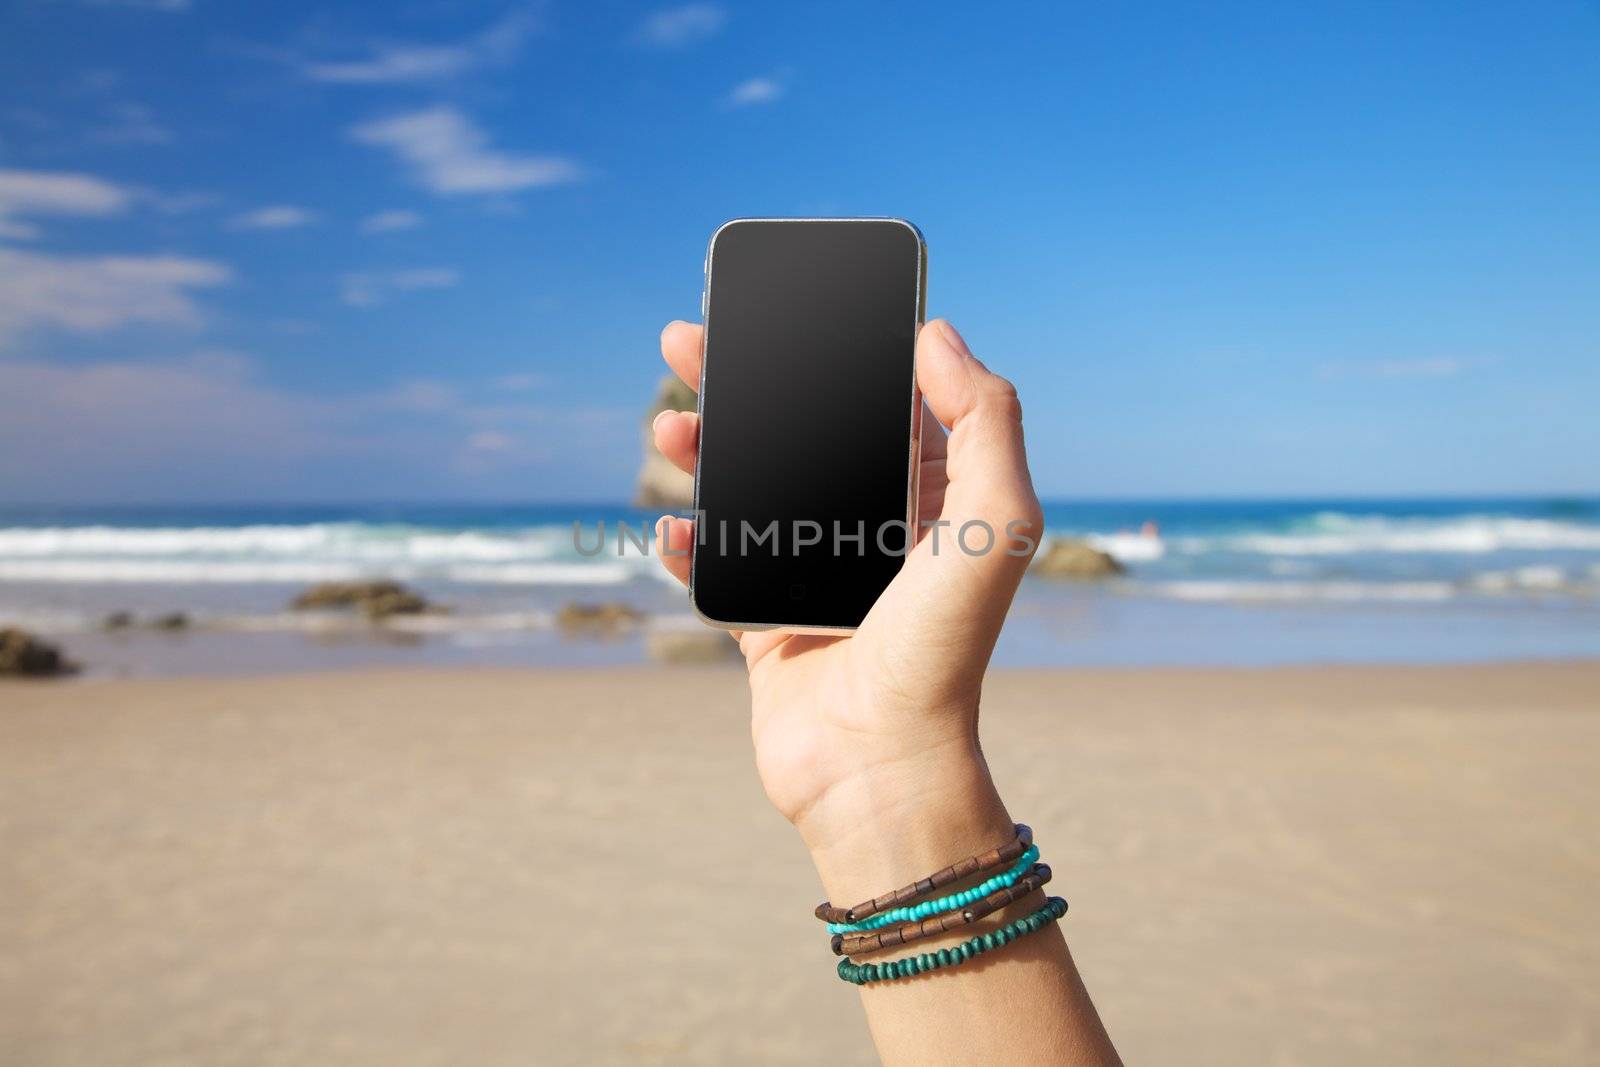 smart phone in woman hand on a beach in Asturias Spain